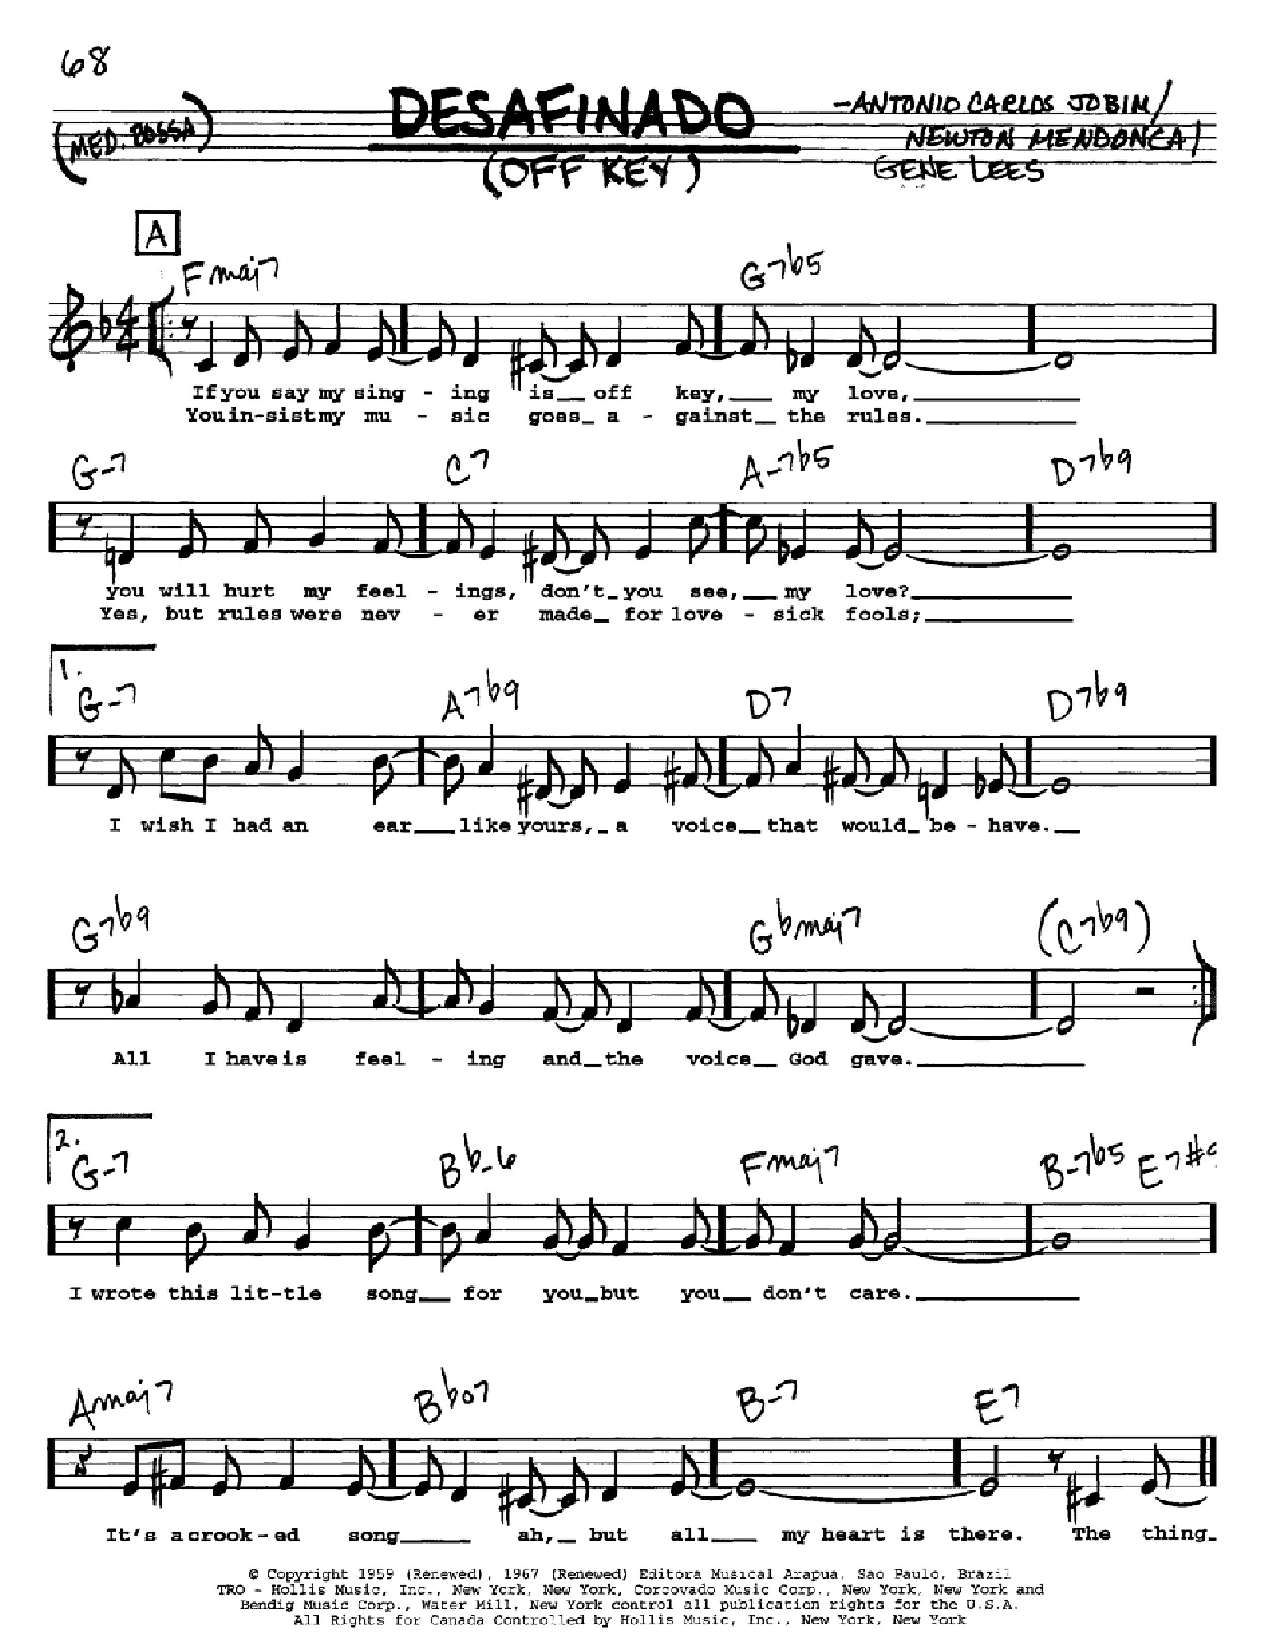 Antonio Carlos Jobim Desafinado (Off Key) Sheet Music Notes & Chords for Real Book - Melody, Lyrics & Chords - C Instruments - Download or Print PDF